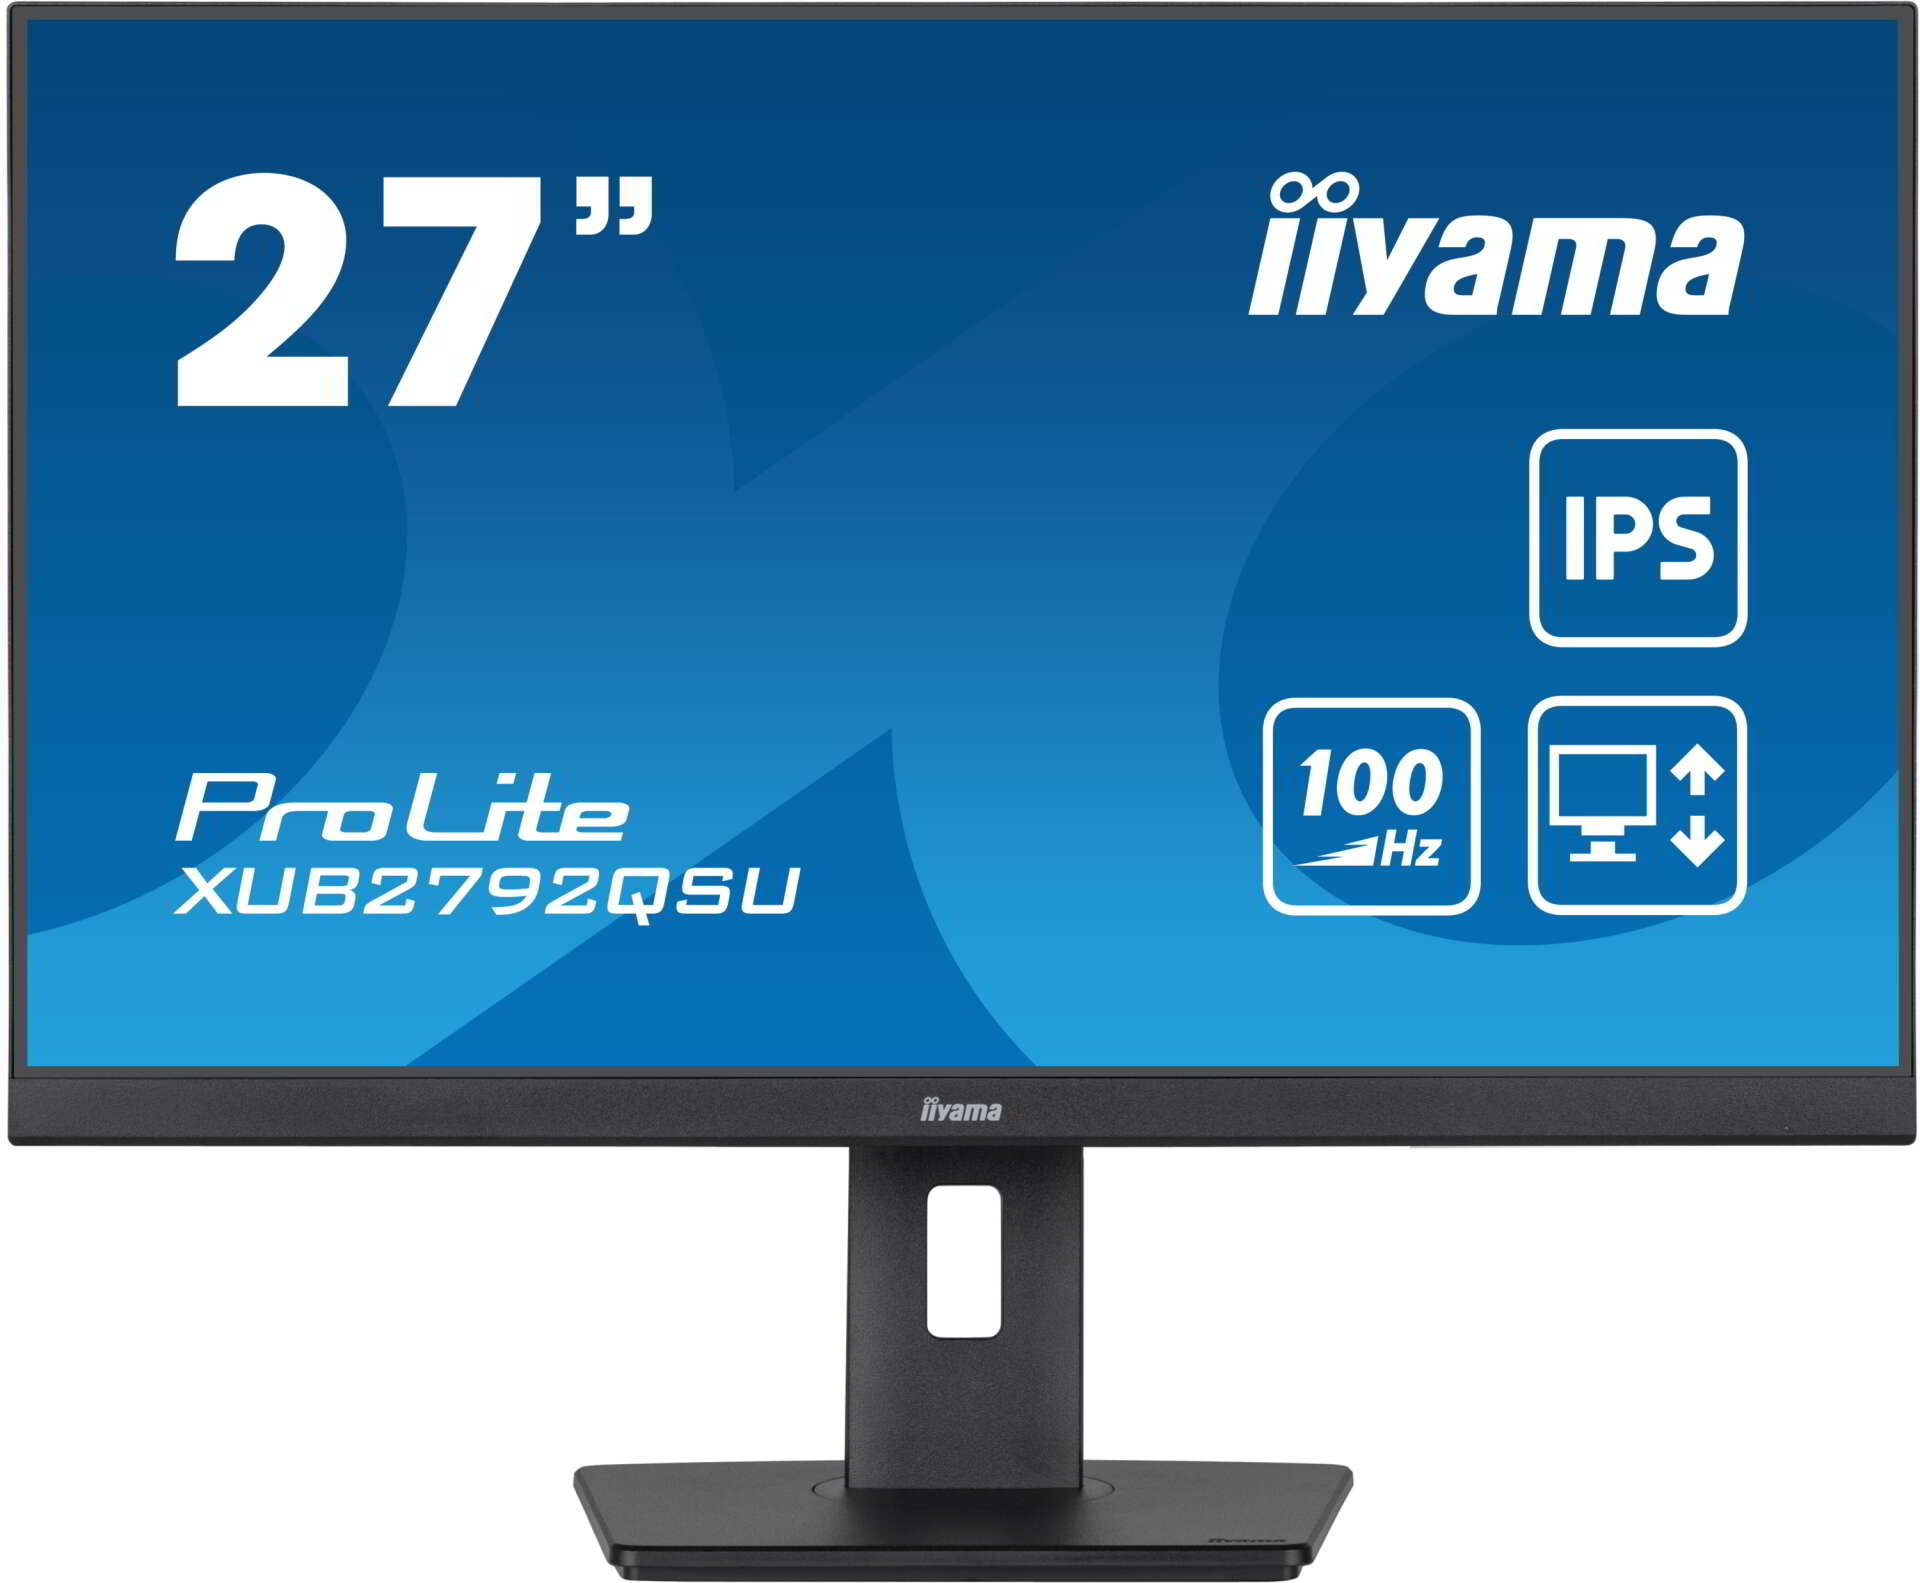 Iiyama 27" prolite xub2792qsu monitor